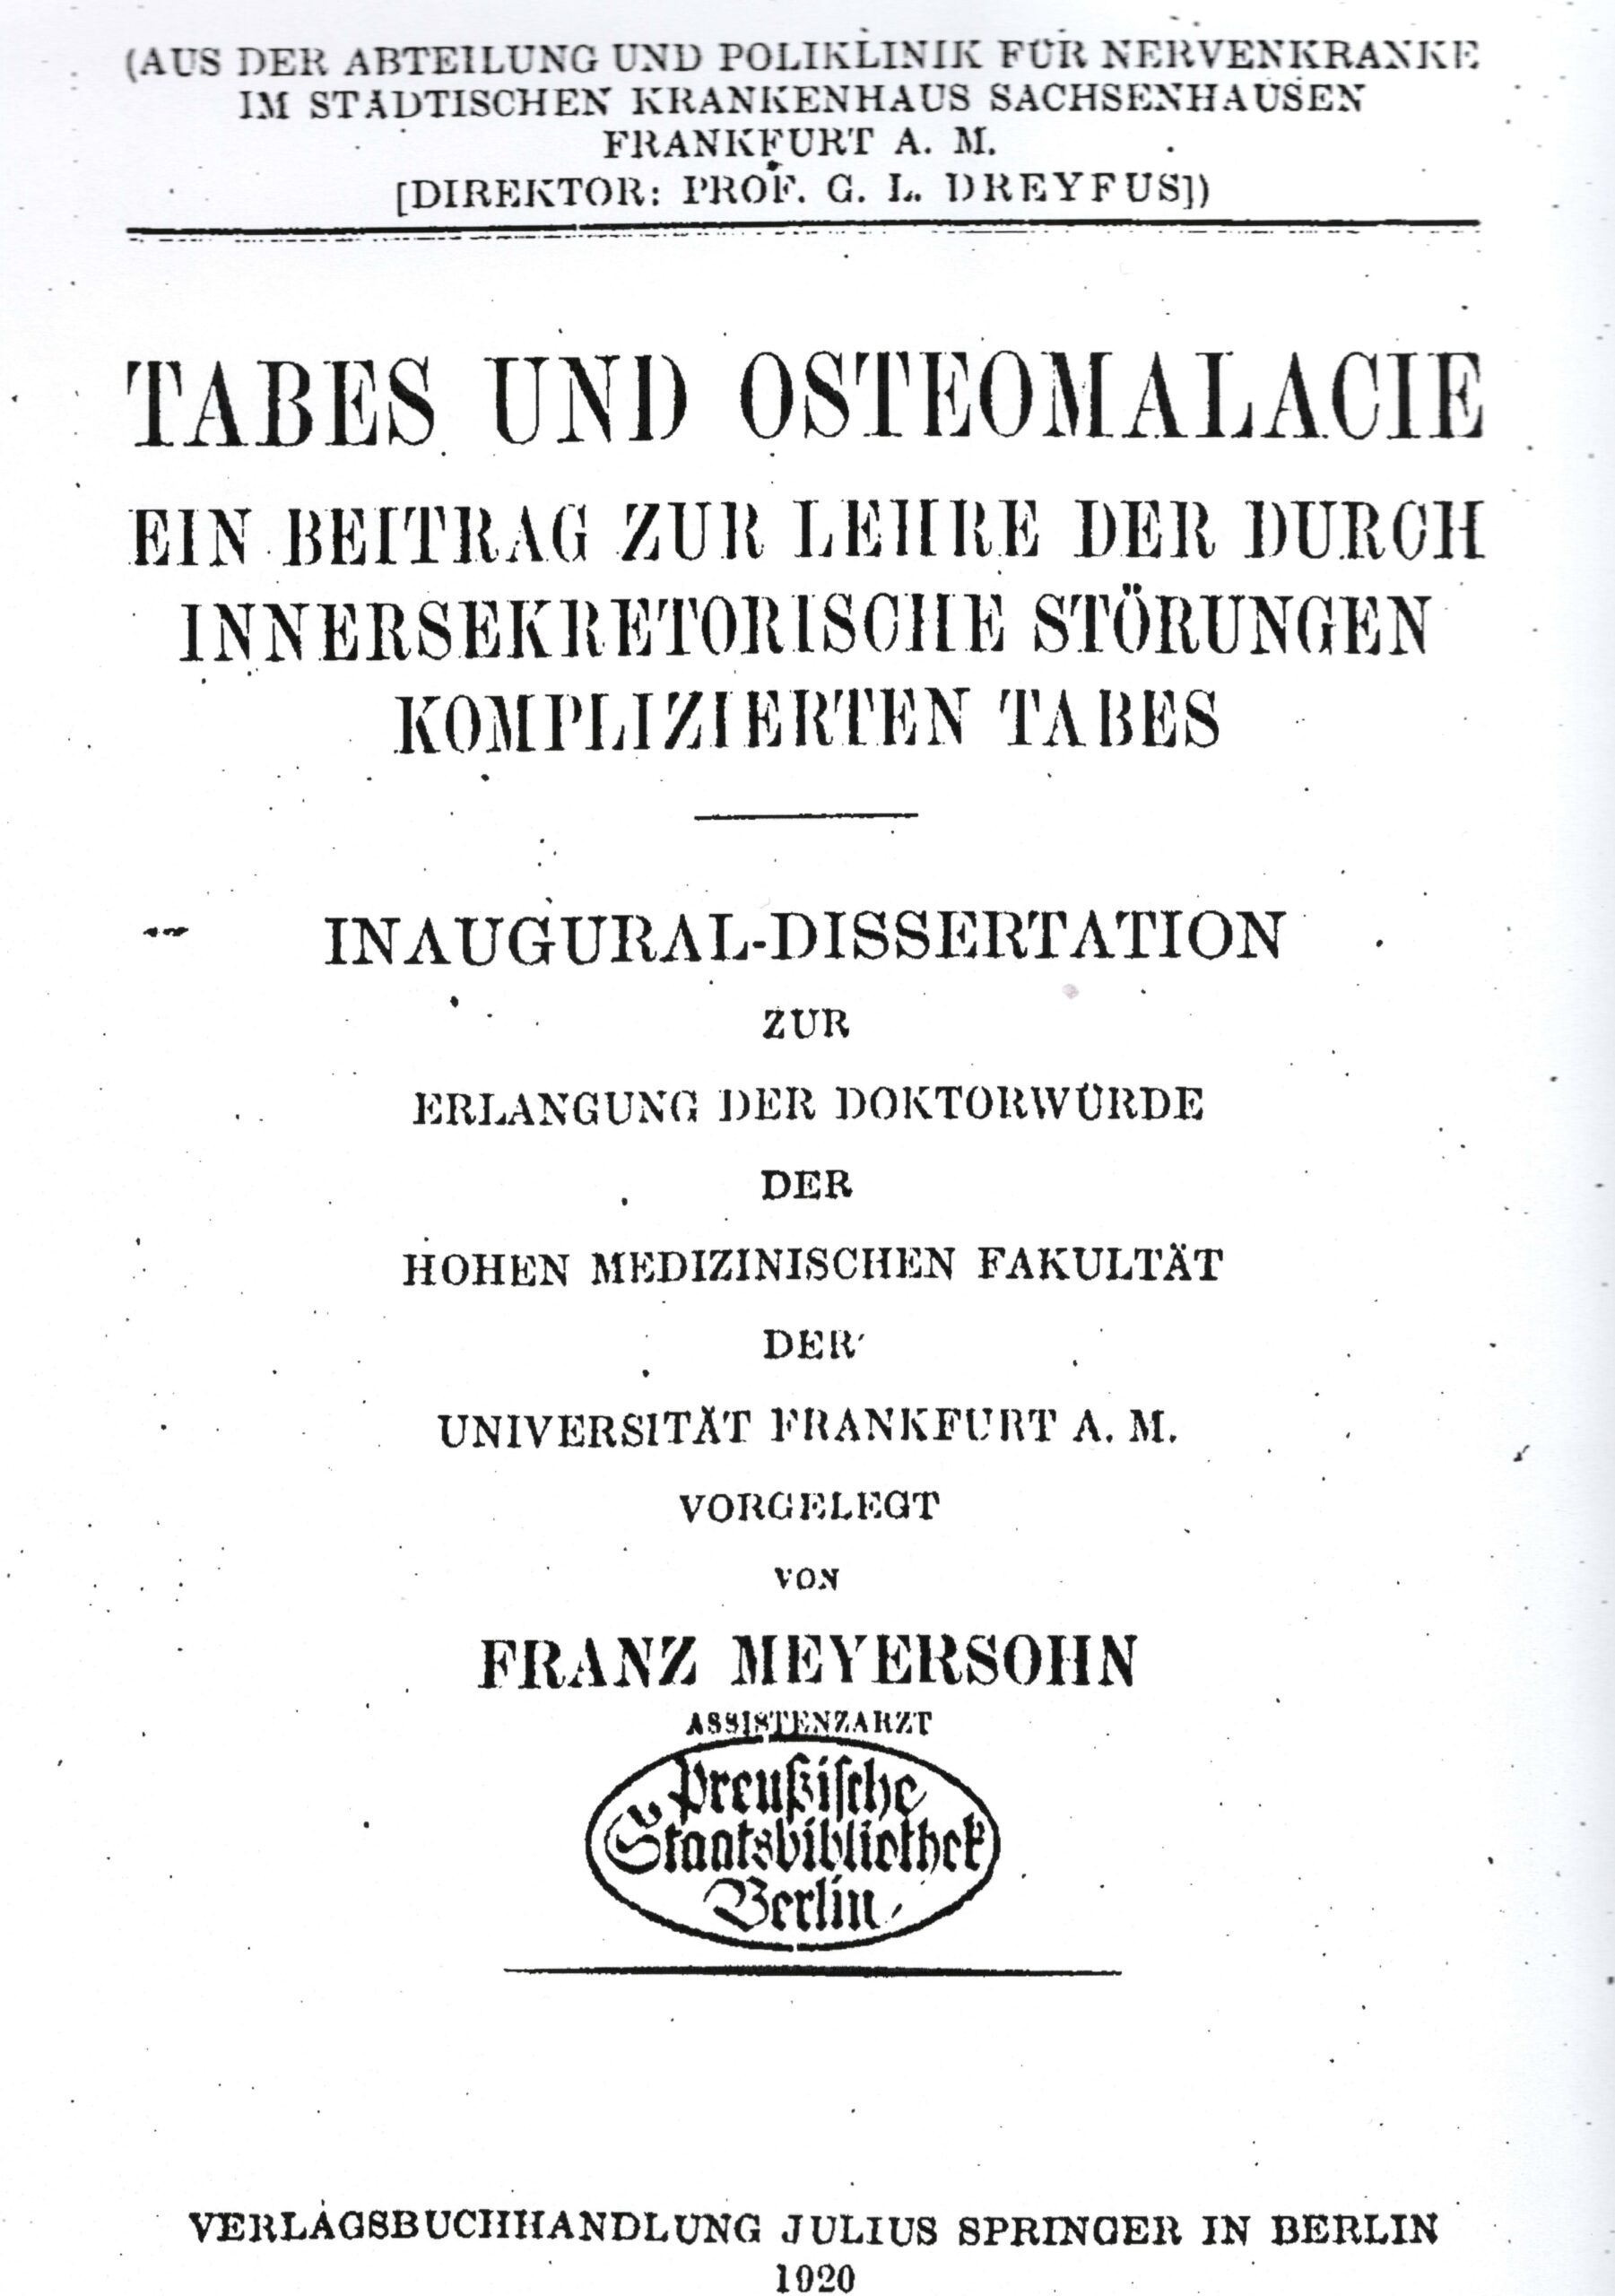 Dissertation, Frankfurt 1920